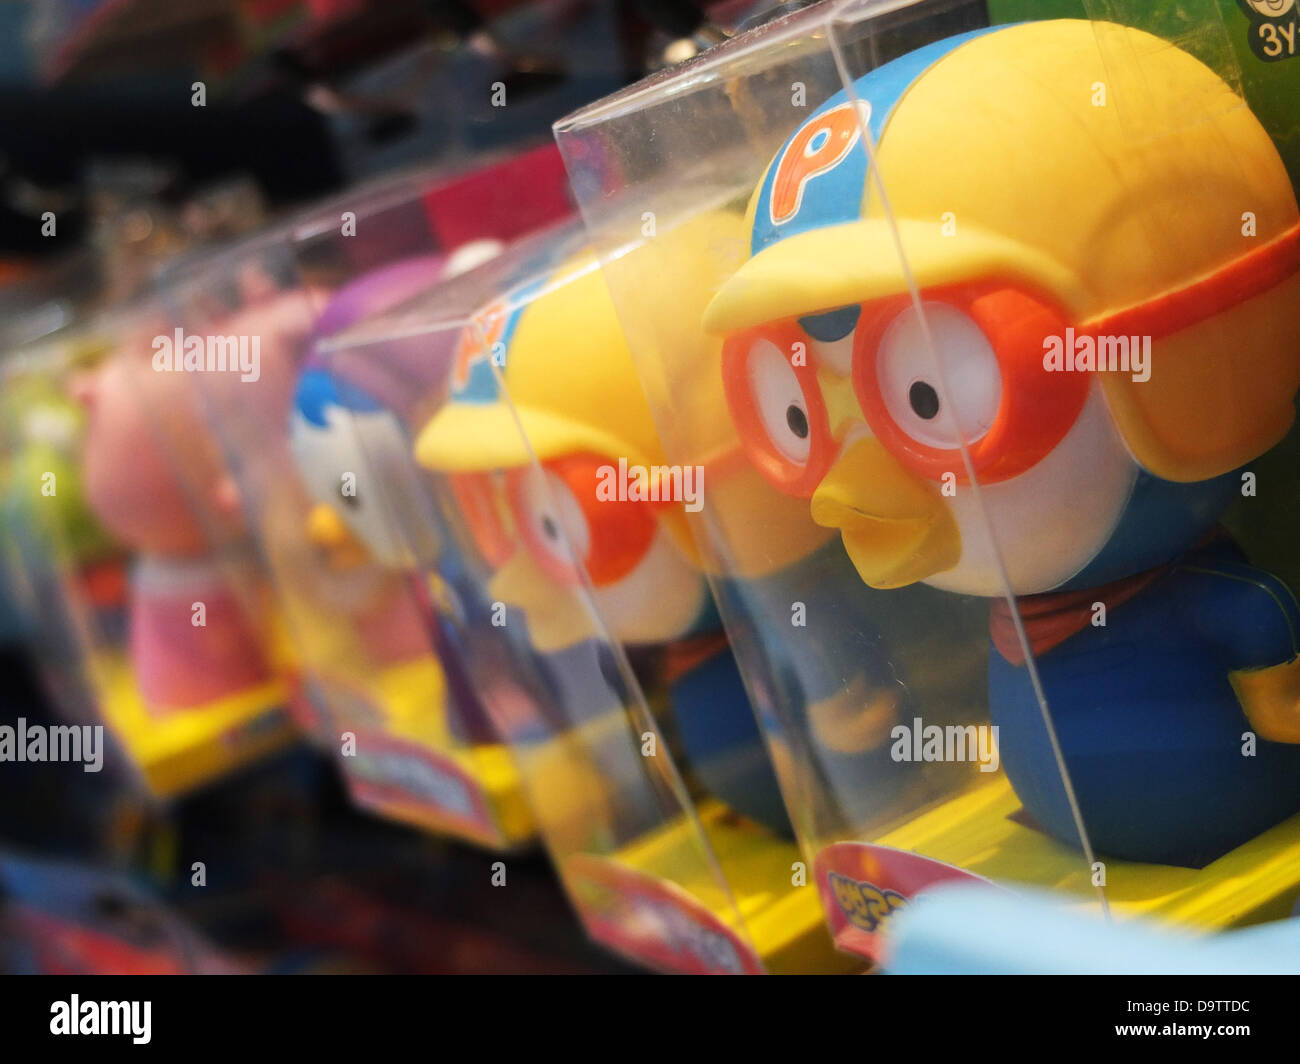 South Korea: Pororo merchandising at toy shop in Everland amusement park Stock Photo